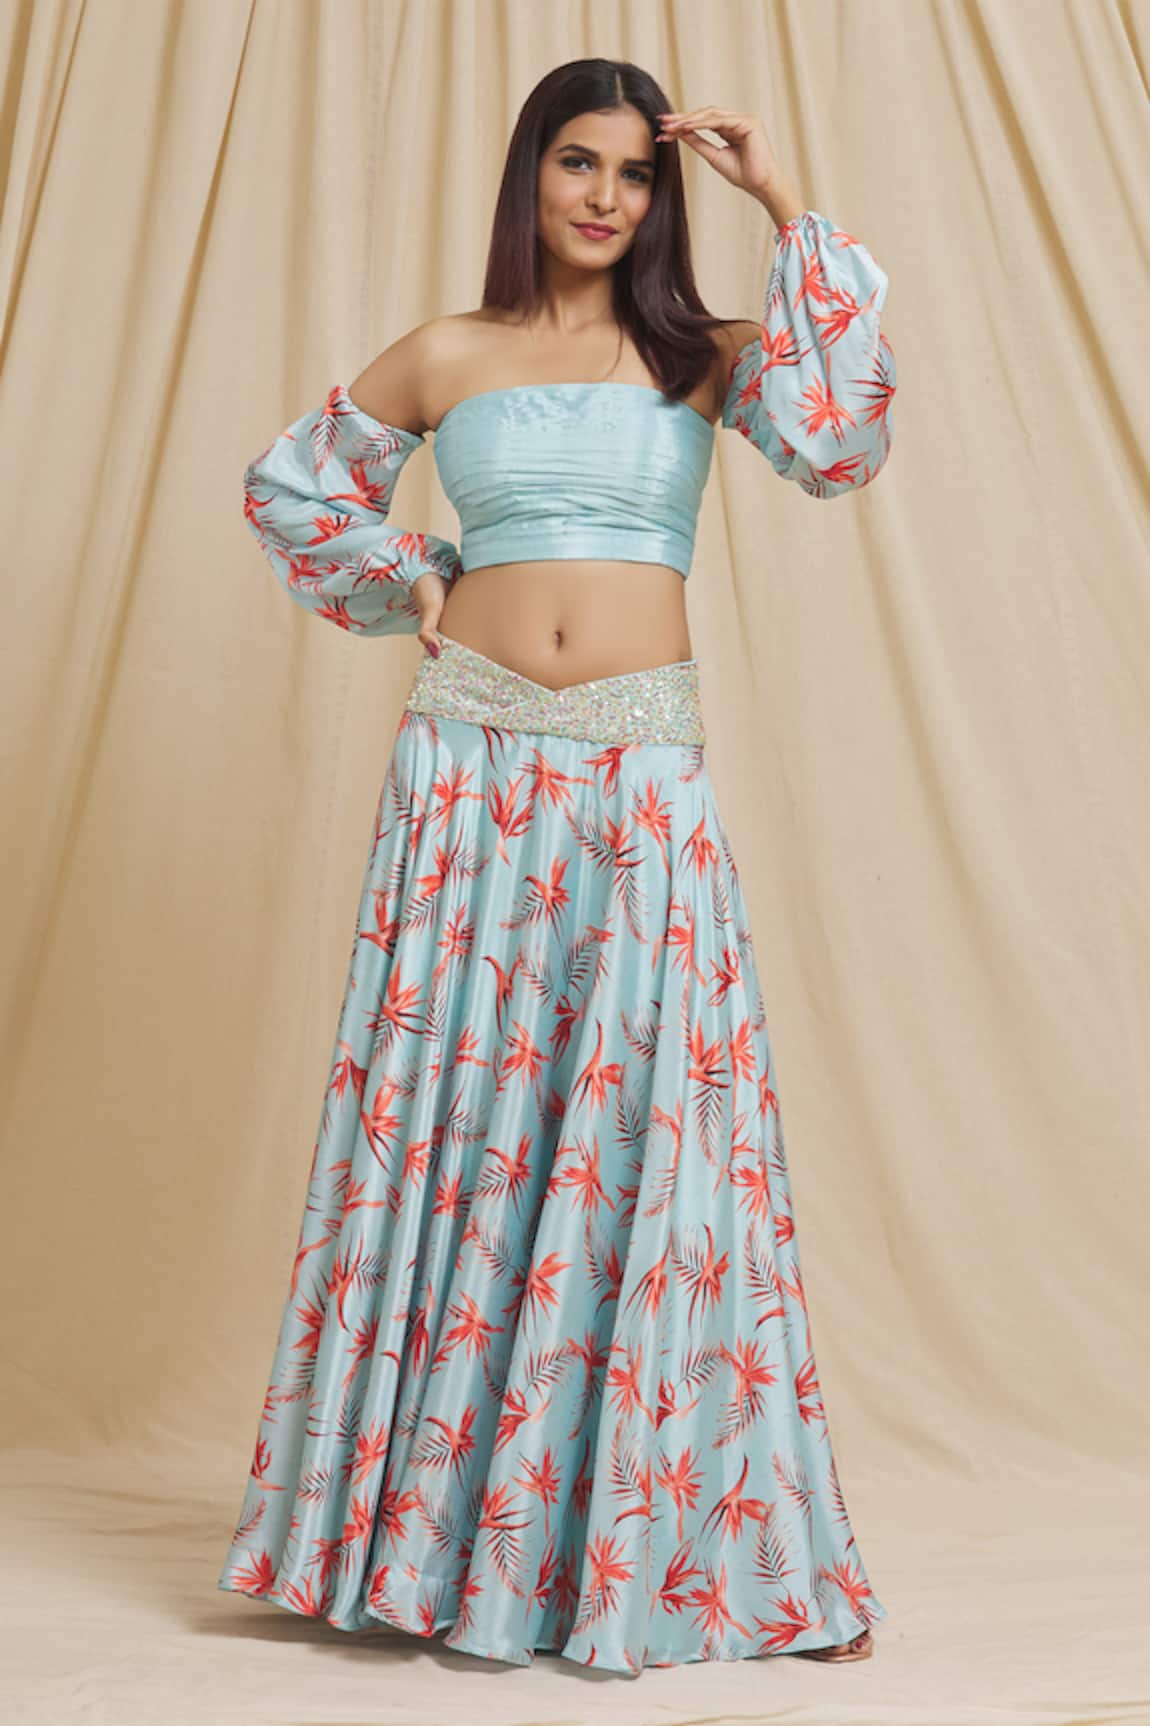 Tarini Vij Tiger Lily Print Skirt With Off Shoulder Top